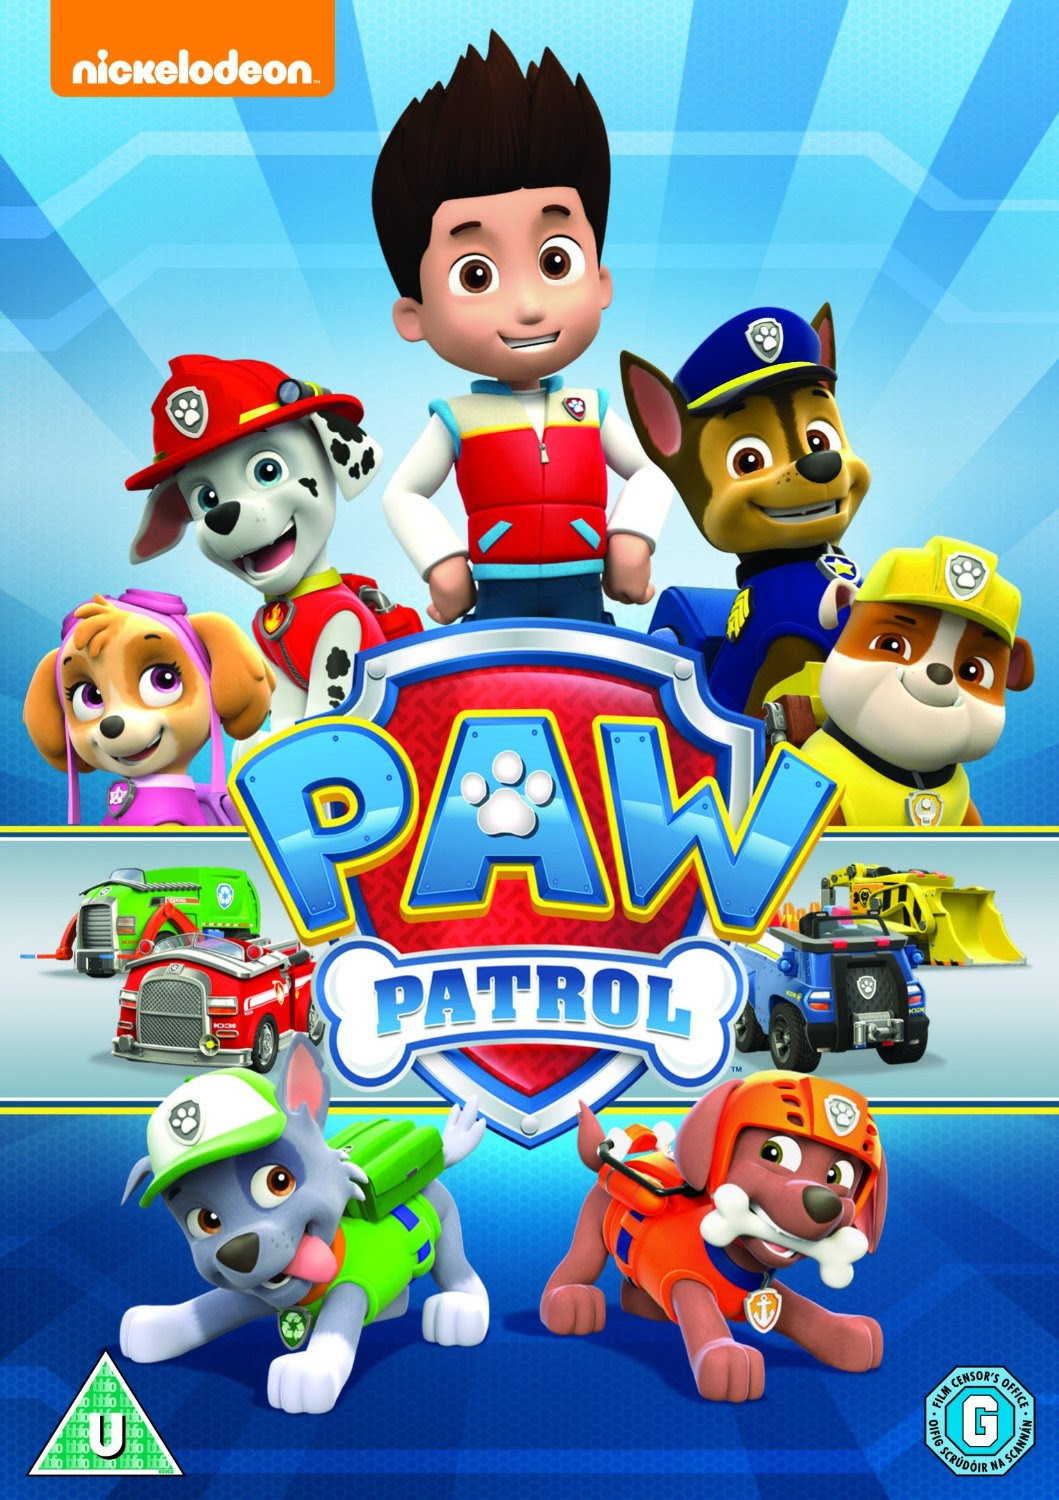 paw patrol ultimate rescue: Patrol British English PAW Patrol Wiki Fandom powered by Wikia